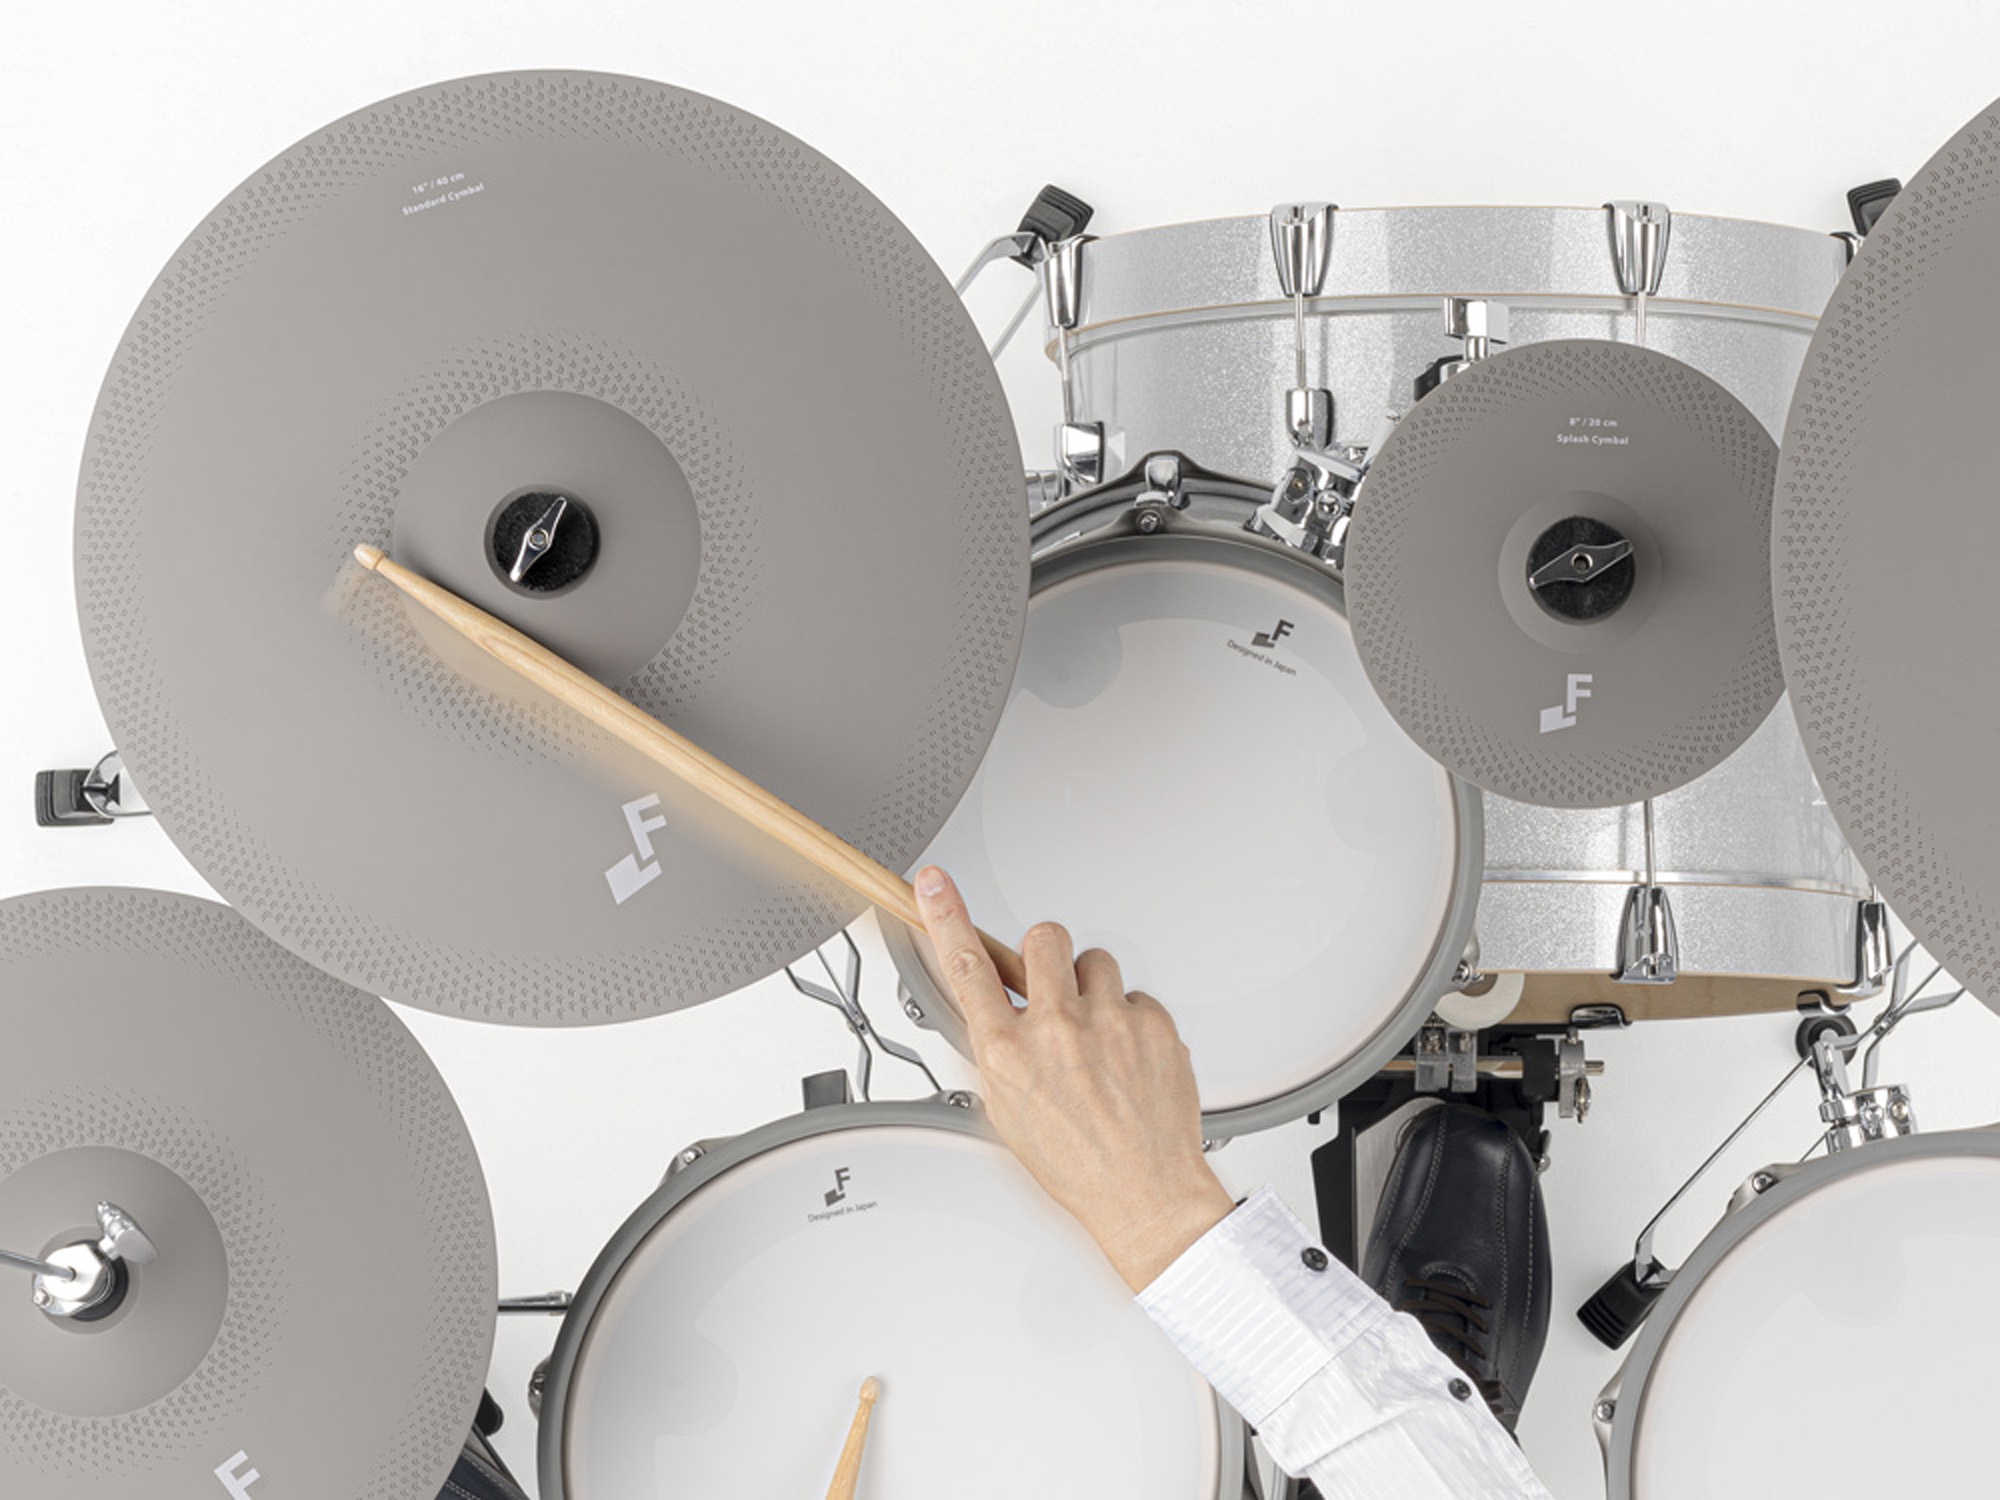 Efnote Efd5 Drum Kit - Komplett E-Drum Set - Variation 2